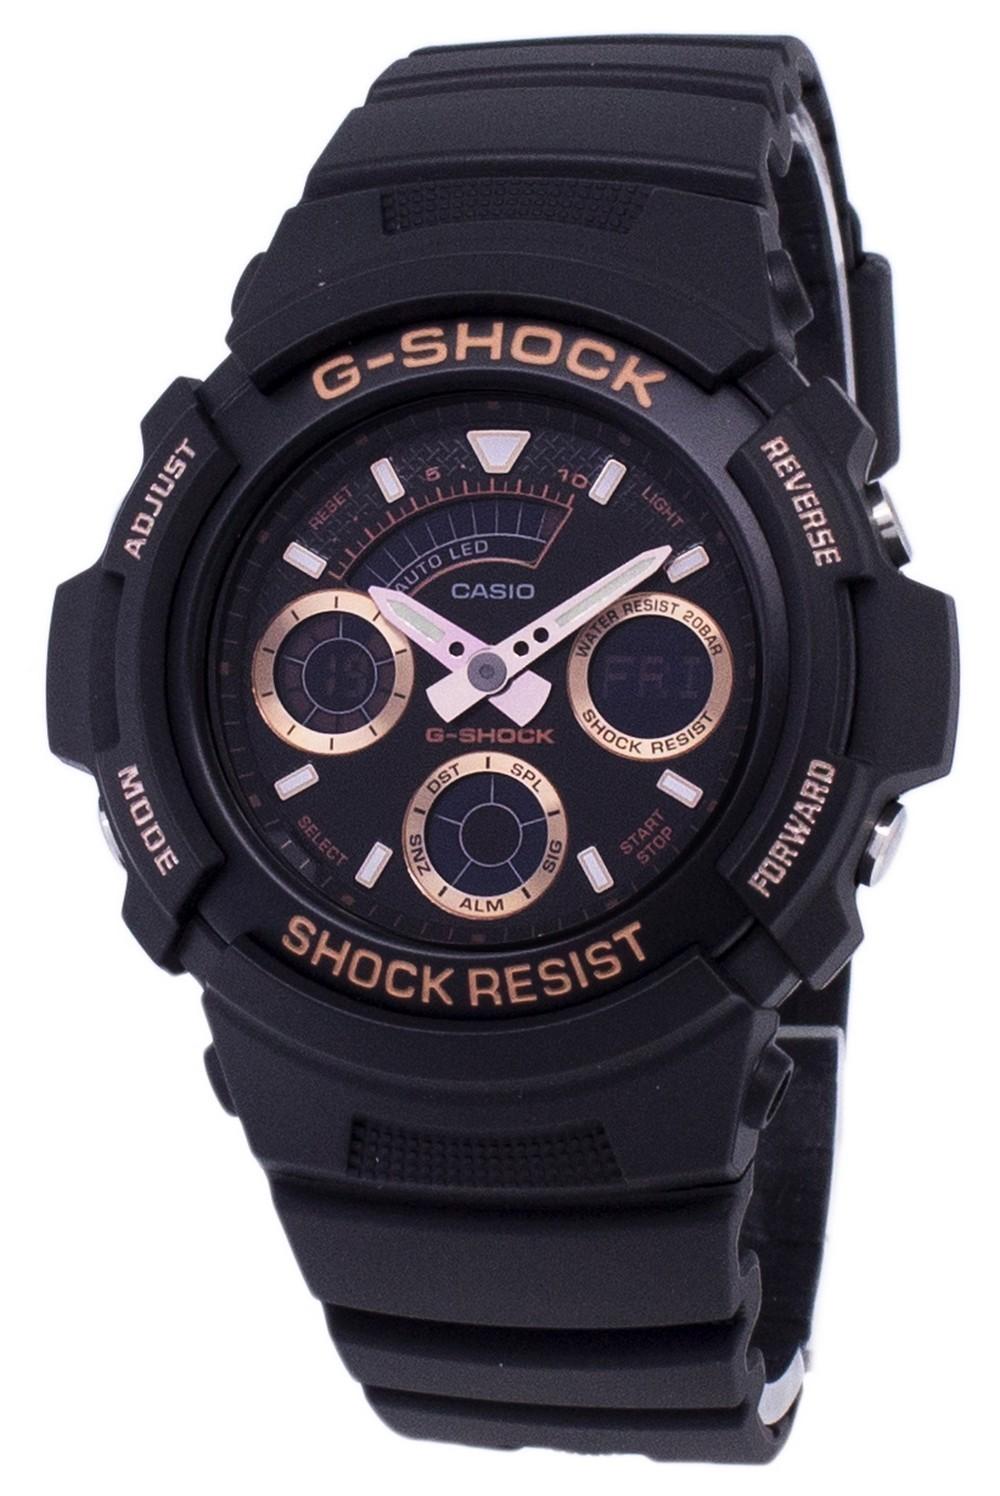 Casio G-Shock Shock Resistant 200M Analog Digital AW-591GBX-1A4 ...